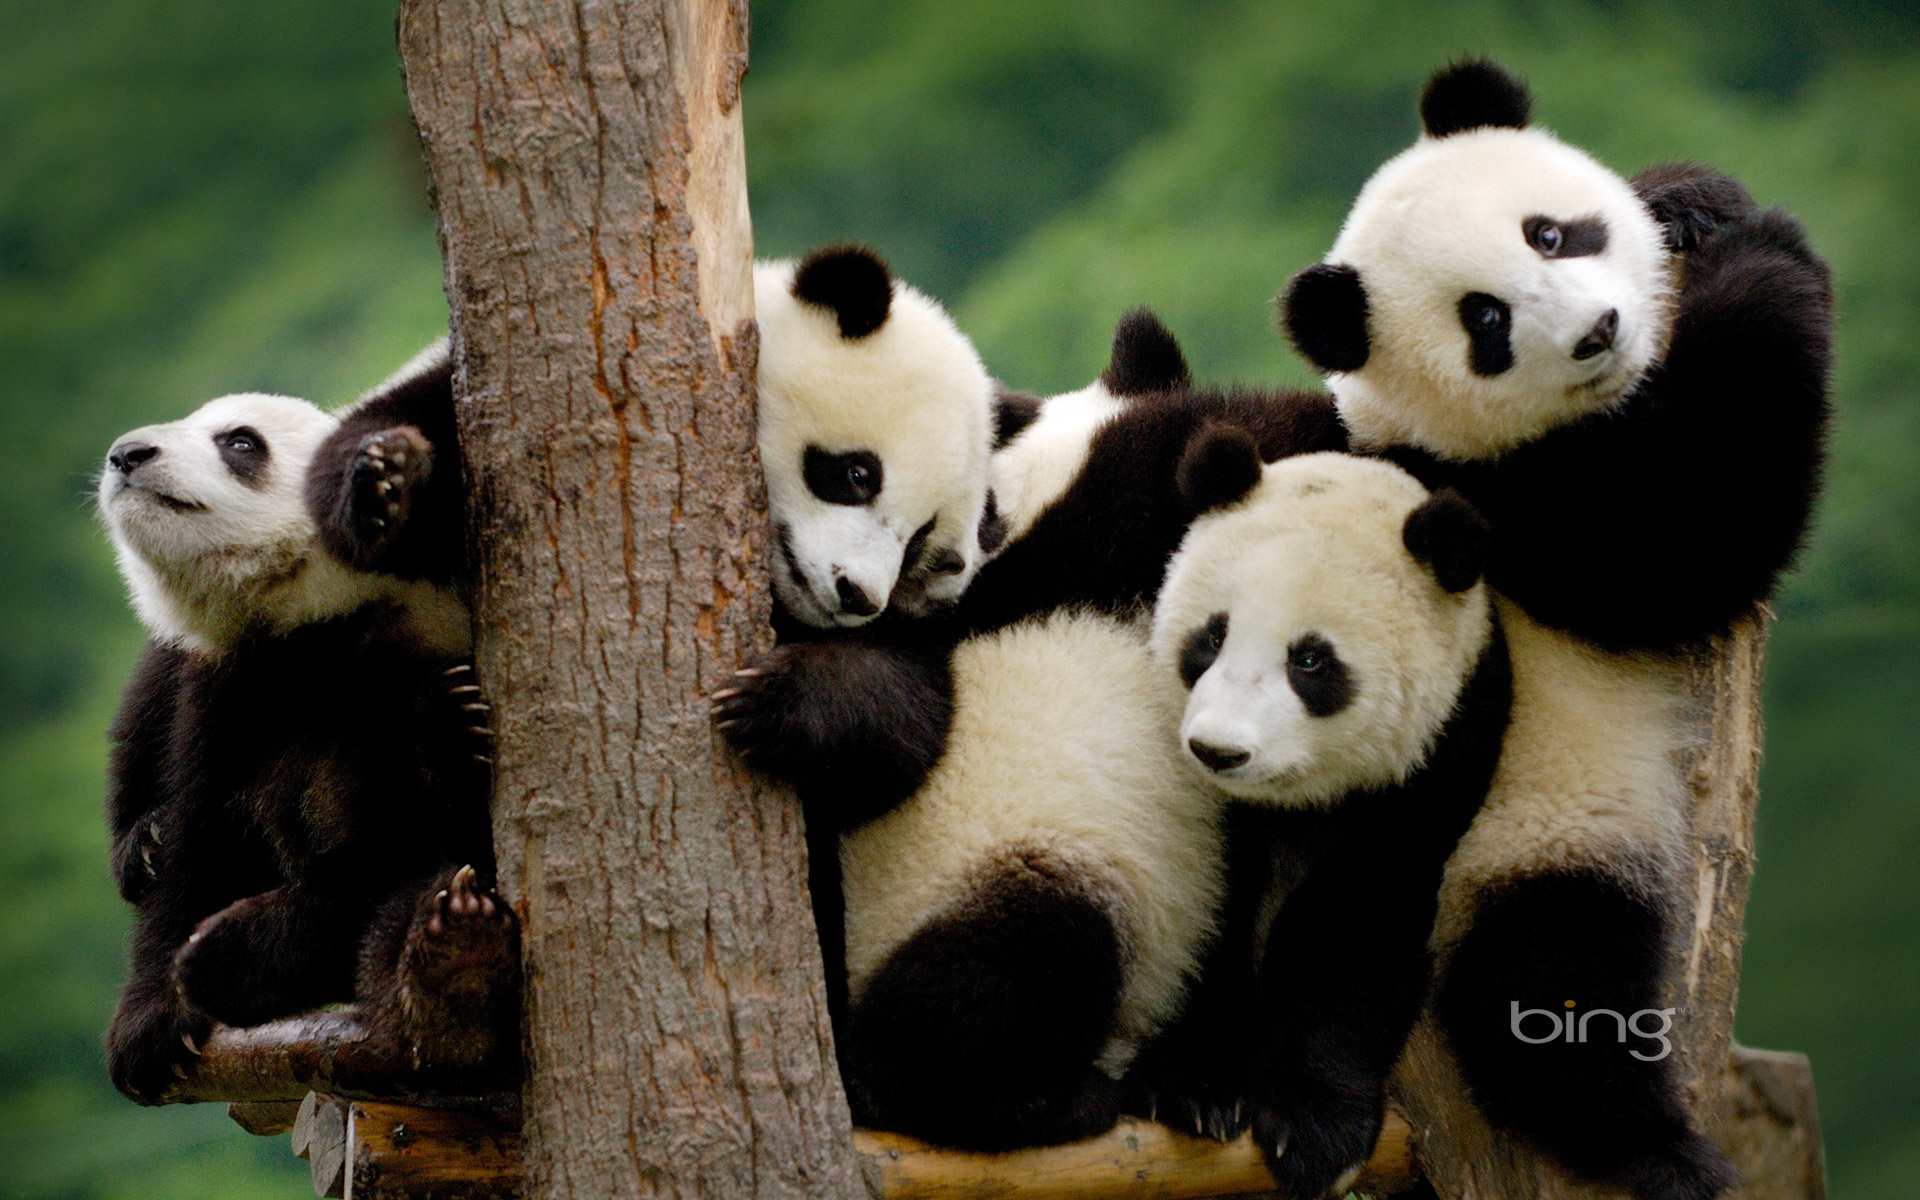 Baby panda 1080P, 2K, 4K, 5K HD wallpapers free download | Wallpaper Flare